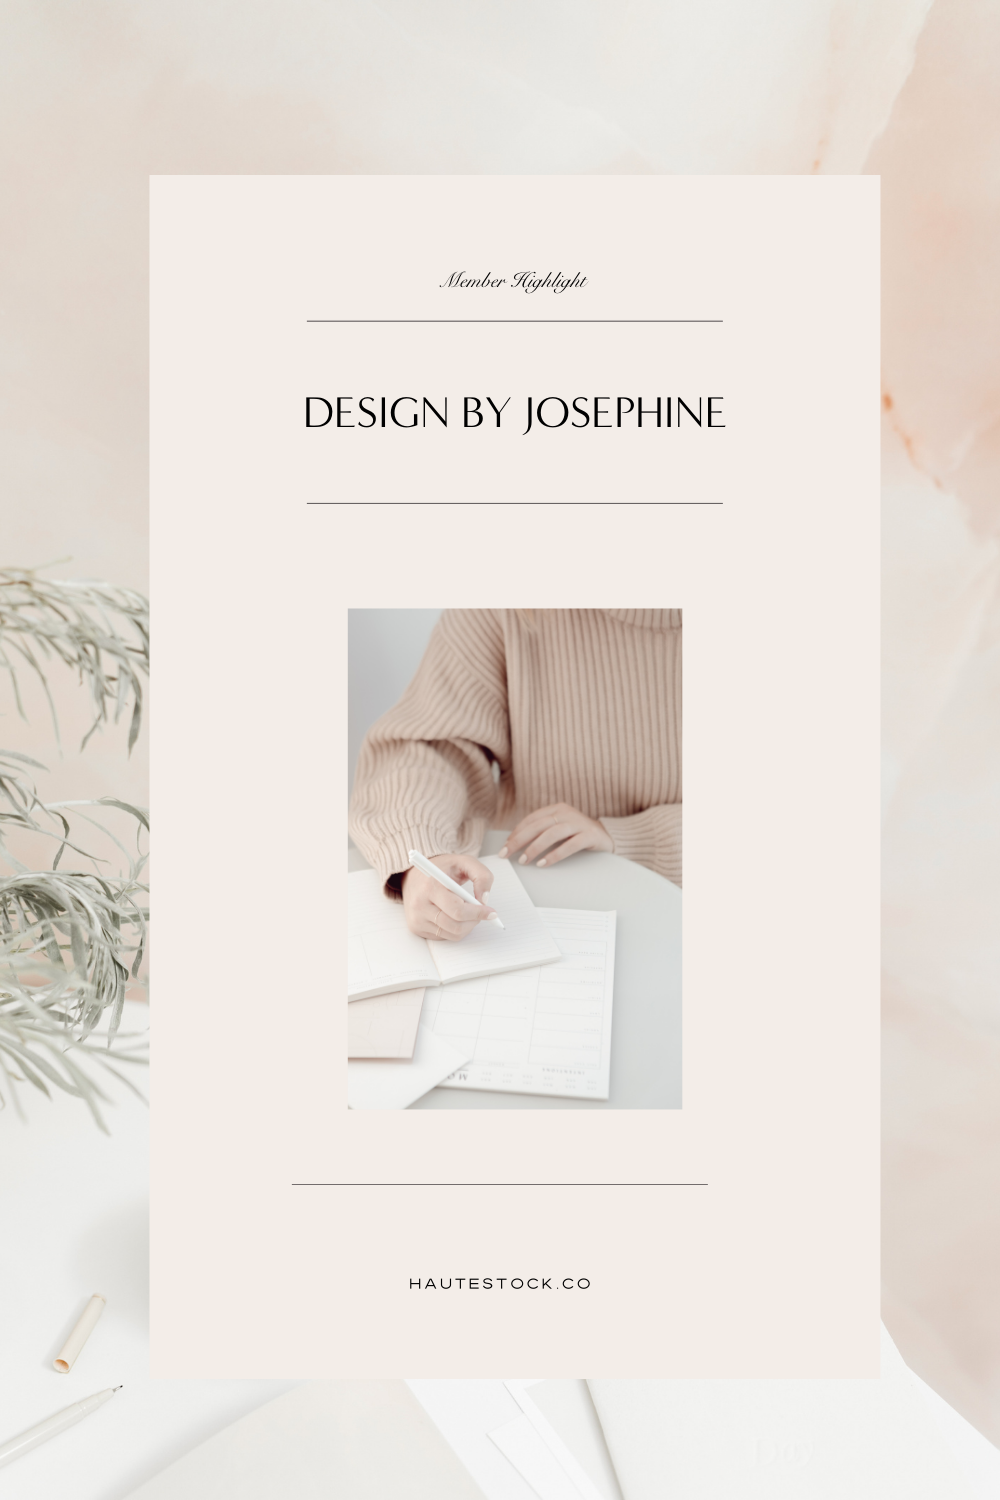 Member Highlight: Josephine of Design by Josephine